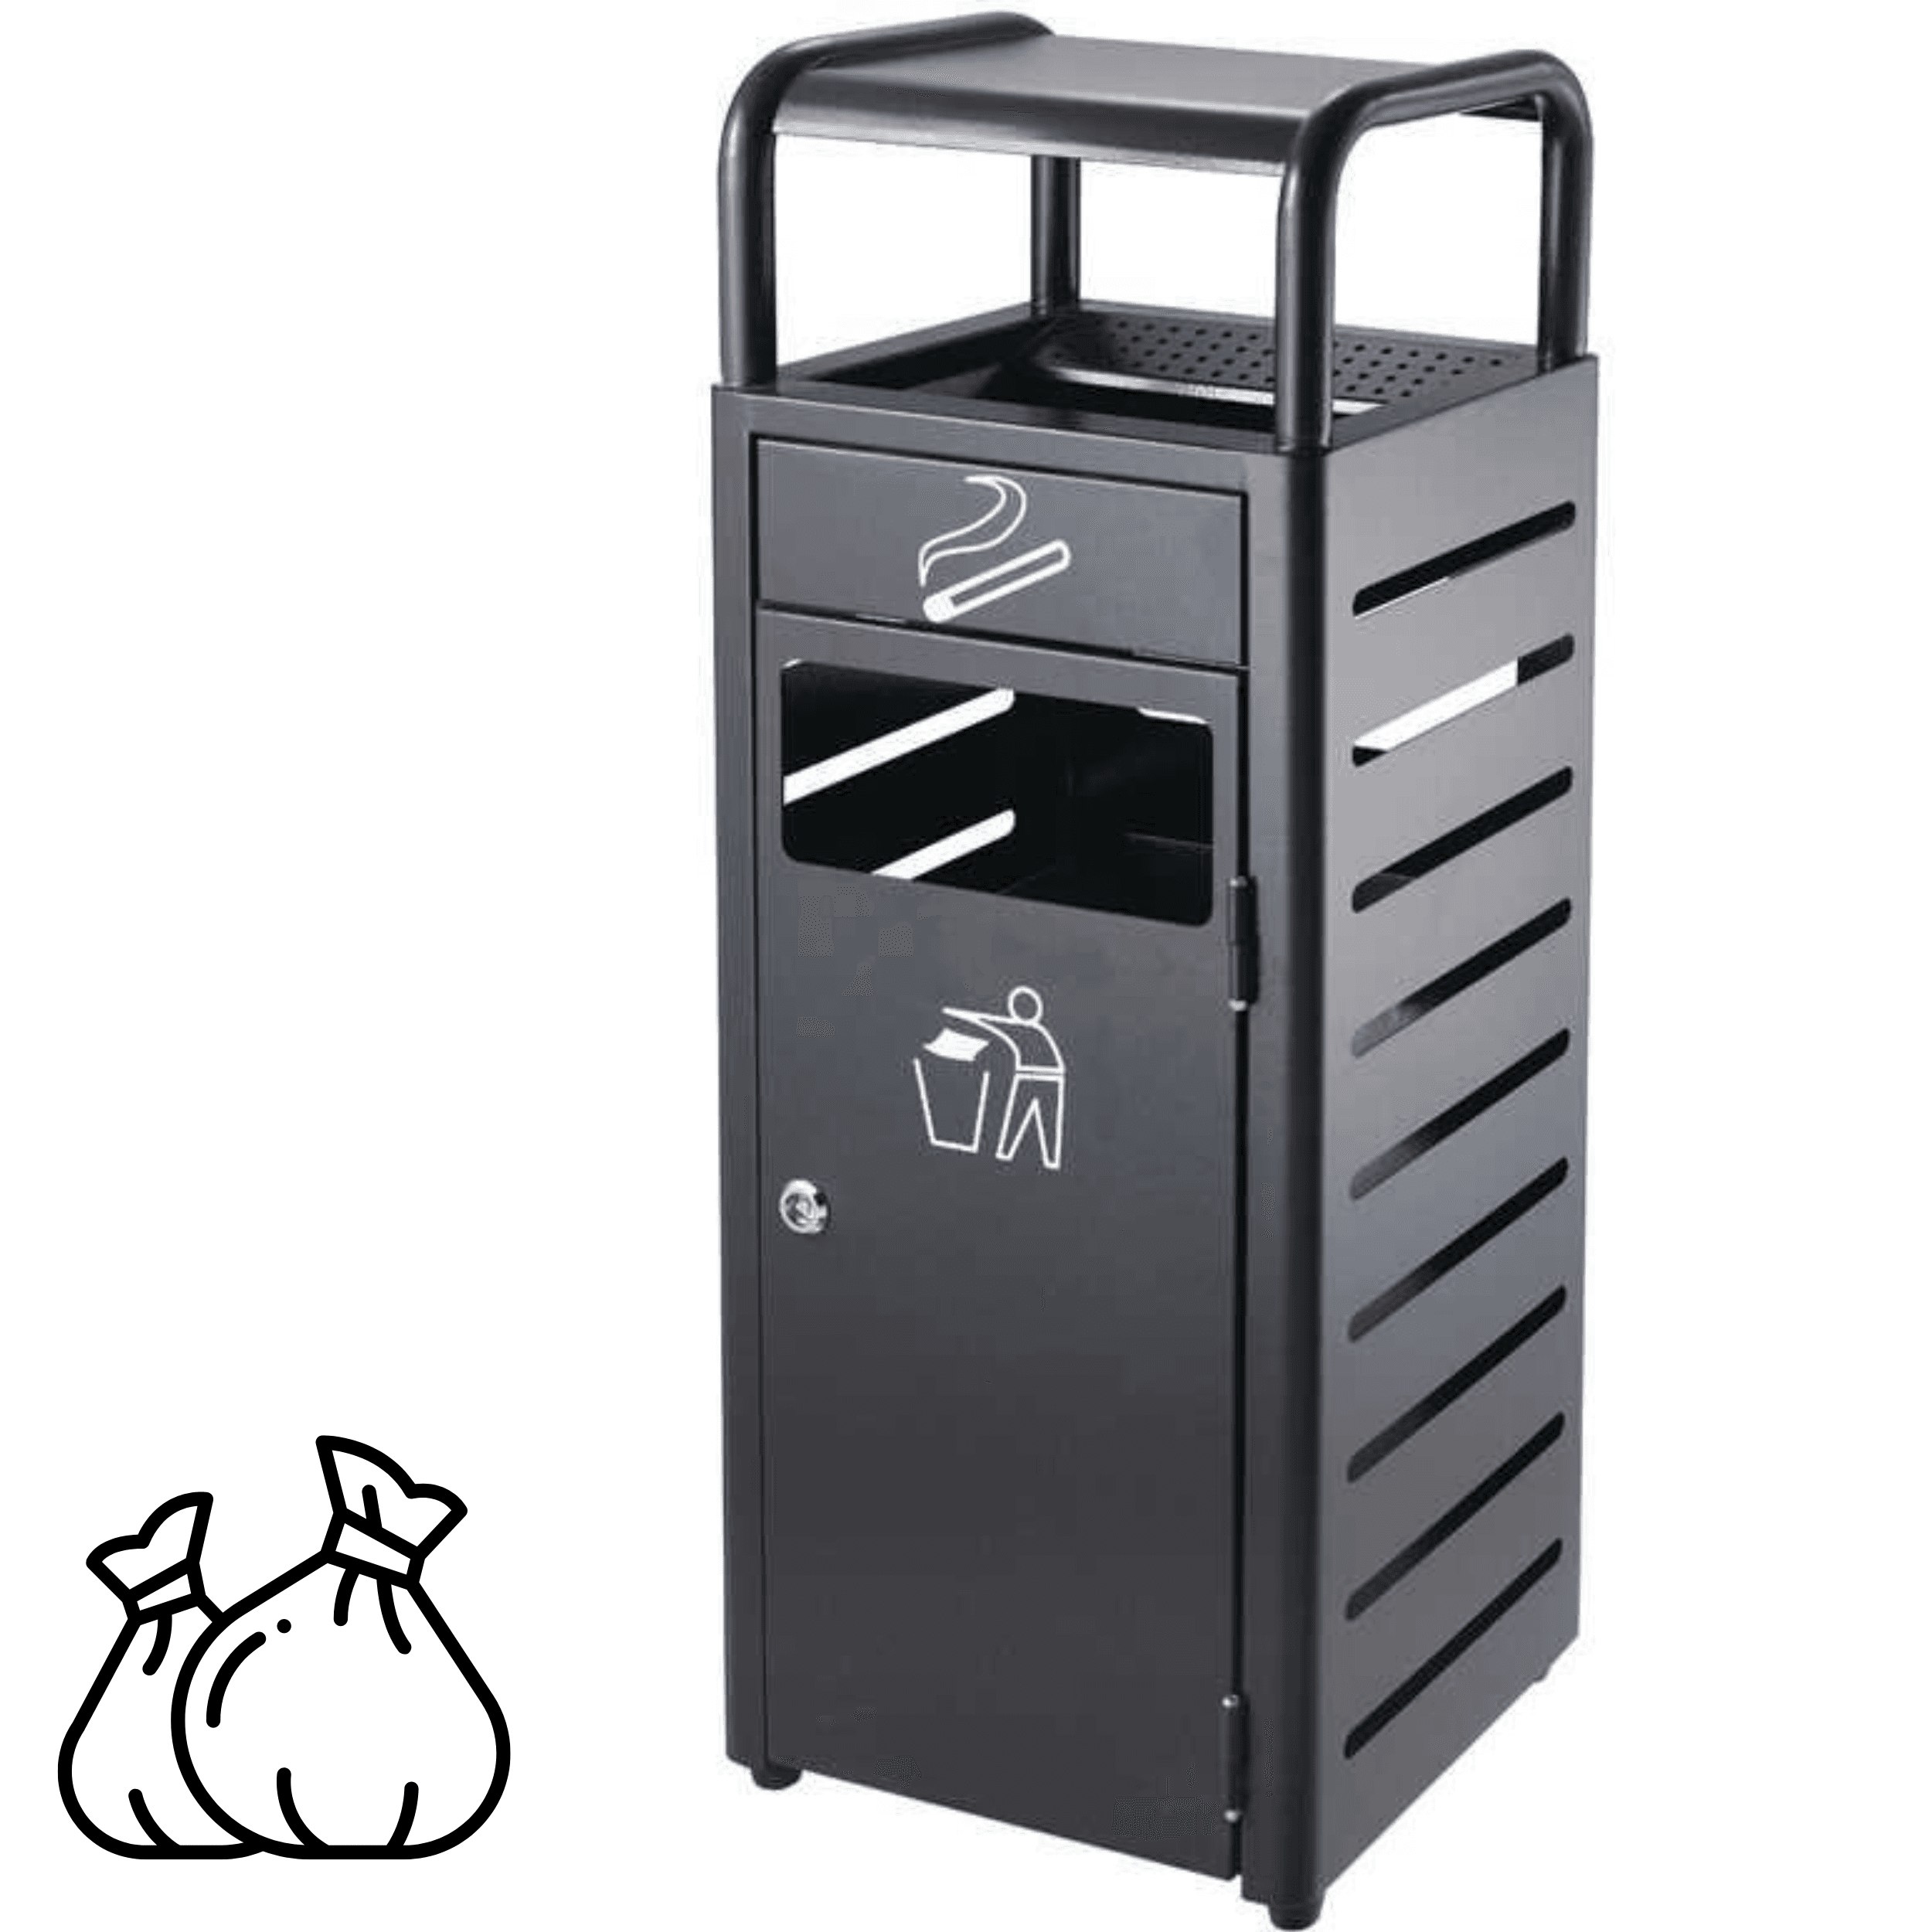 Litter bin with ashtray - black